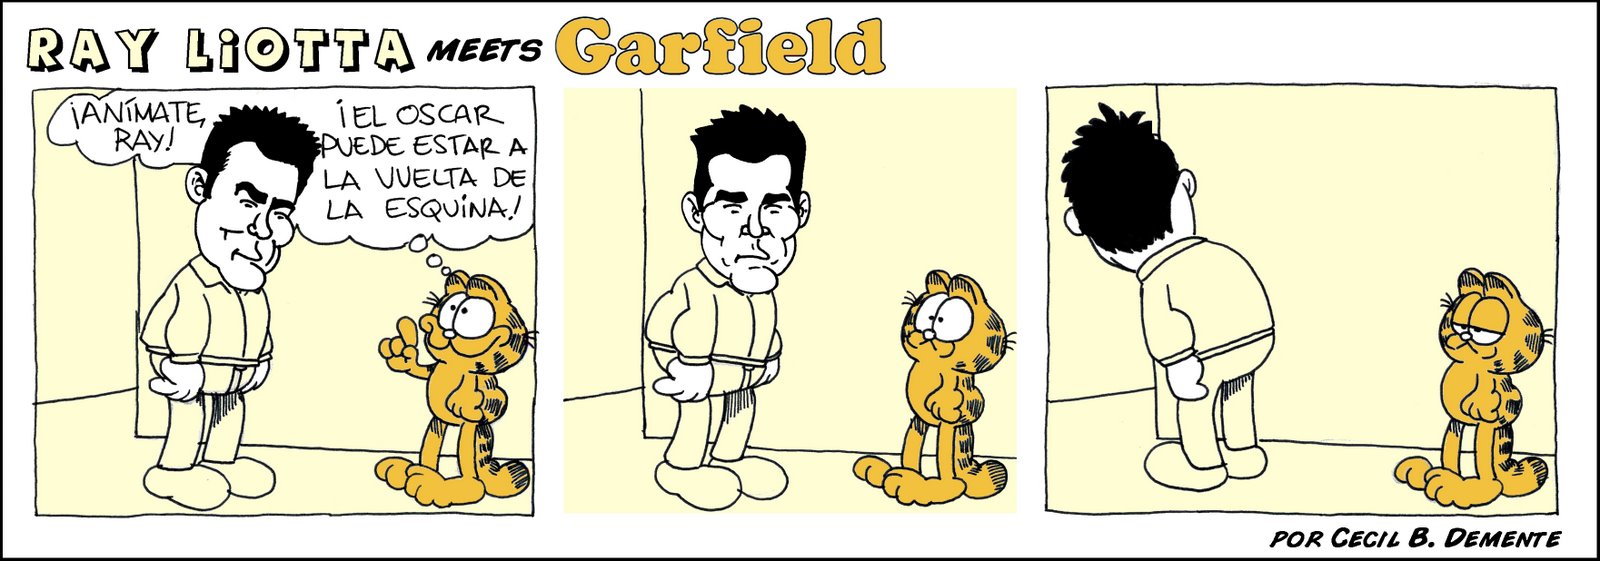 [Ray+Liotta+meets+Garfield+2.jpg]